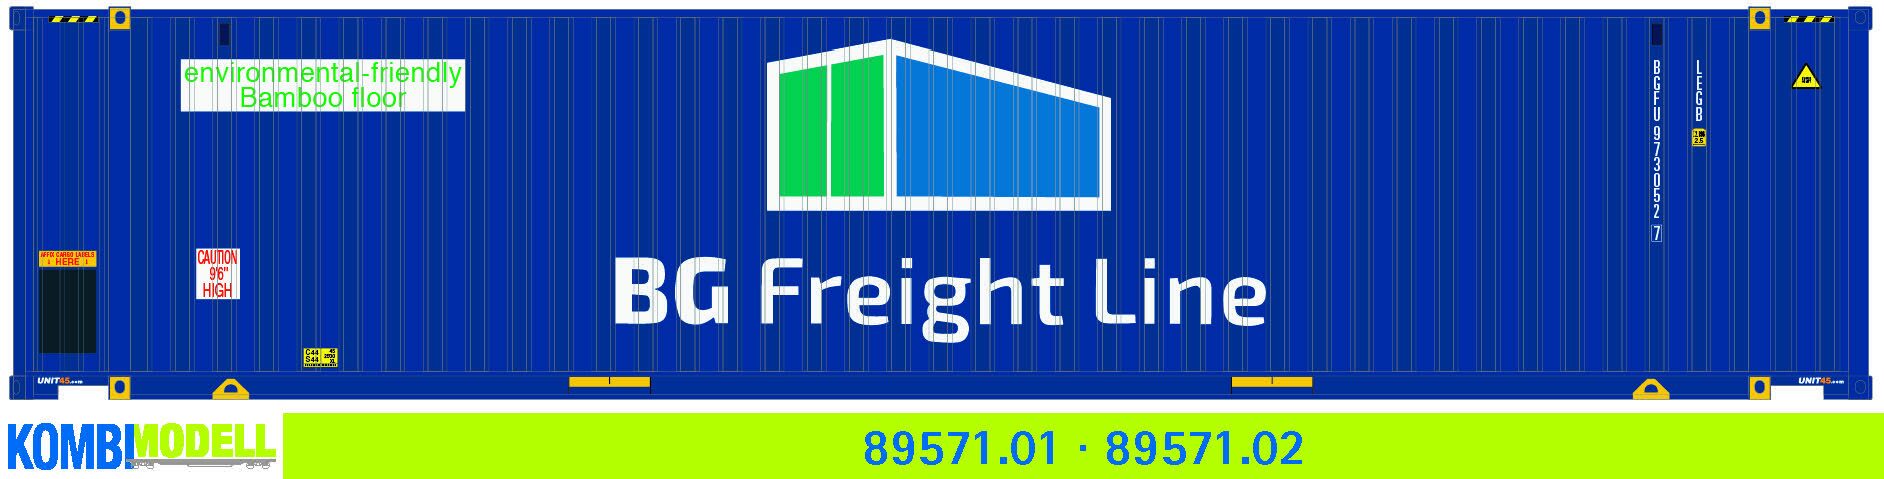 Kombimodell 89571.02 WB-A /Ct 45' (Euro) BG Freight Line"" (bamboo floor", Logo neu) #BGFU 973207"